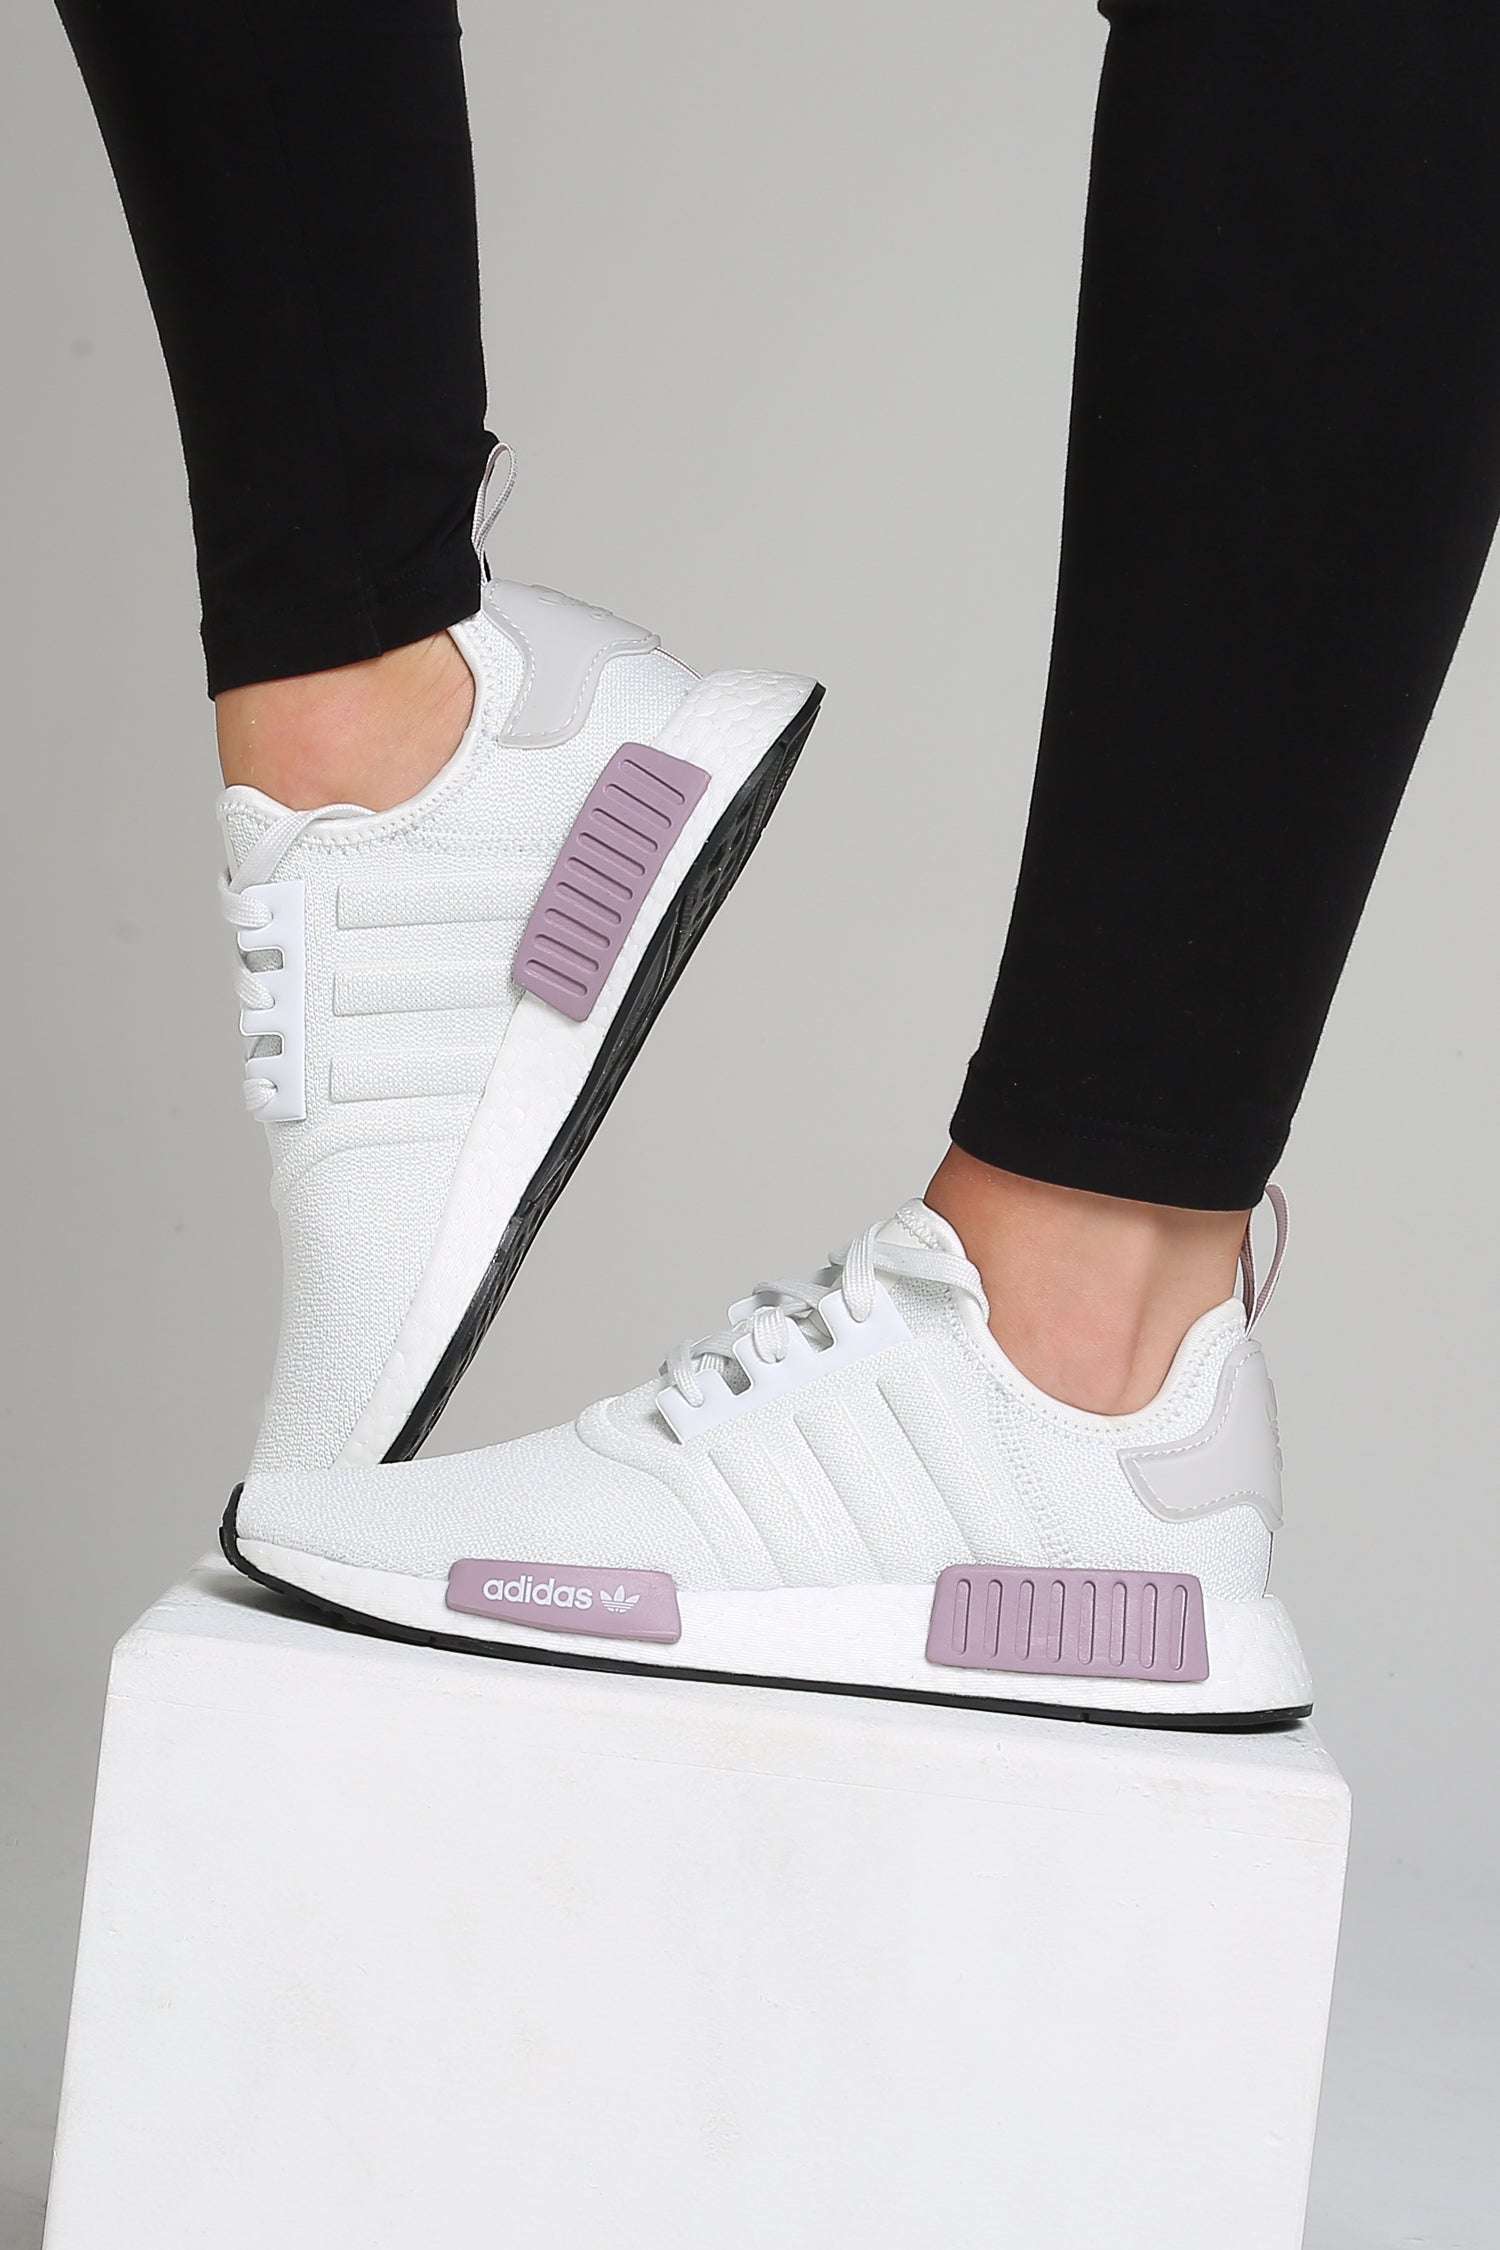 adidas nmd womens white and purple